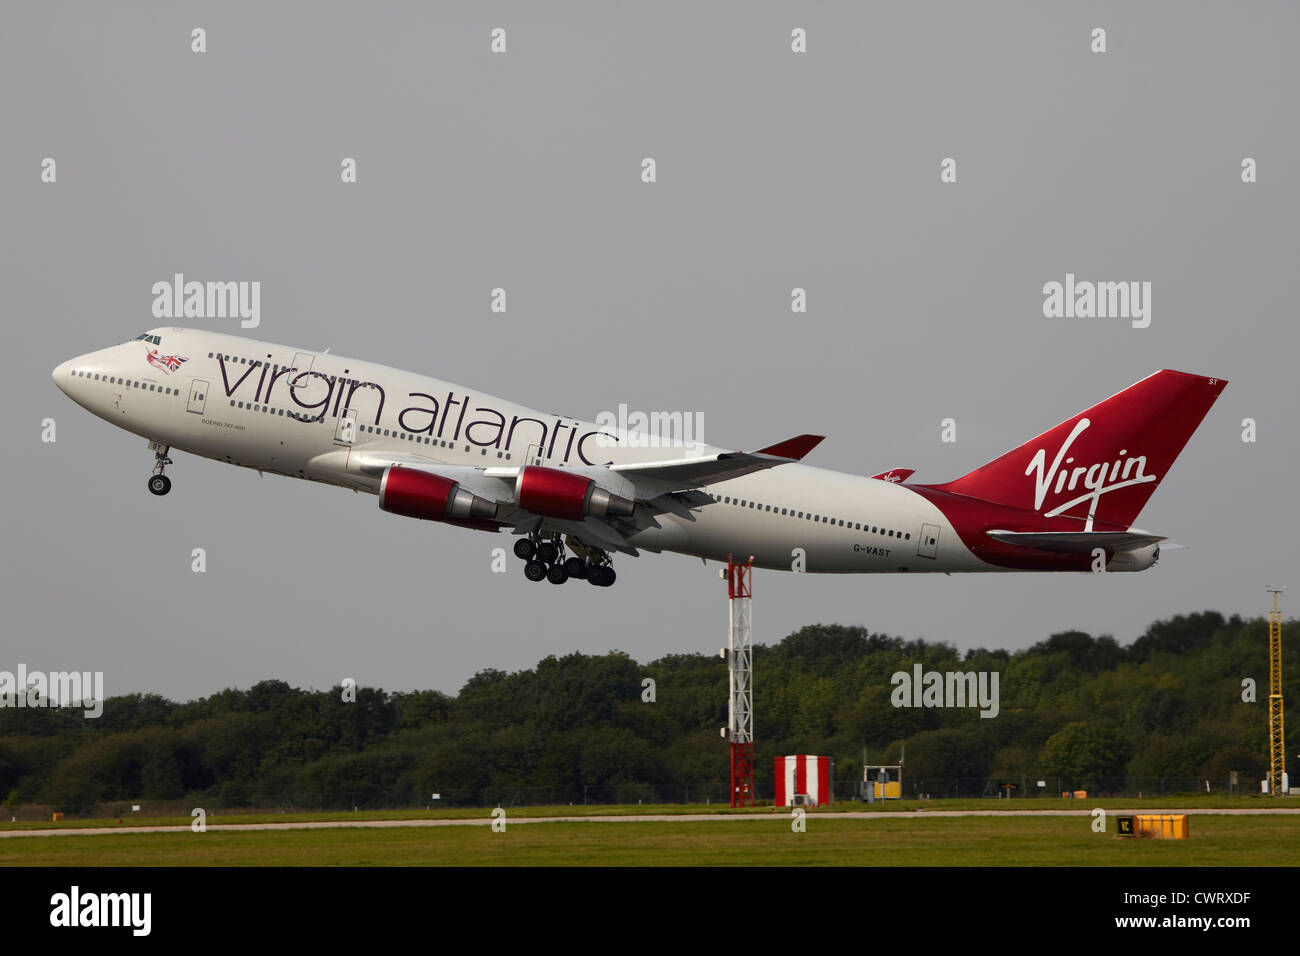 Virgin Atlantic Boeing 747 Jumbo Jet take off at Manchester Airport Stock Photo